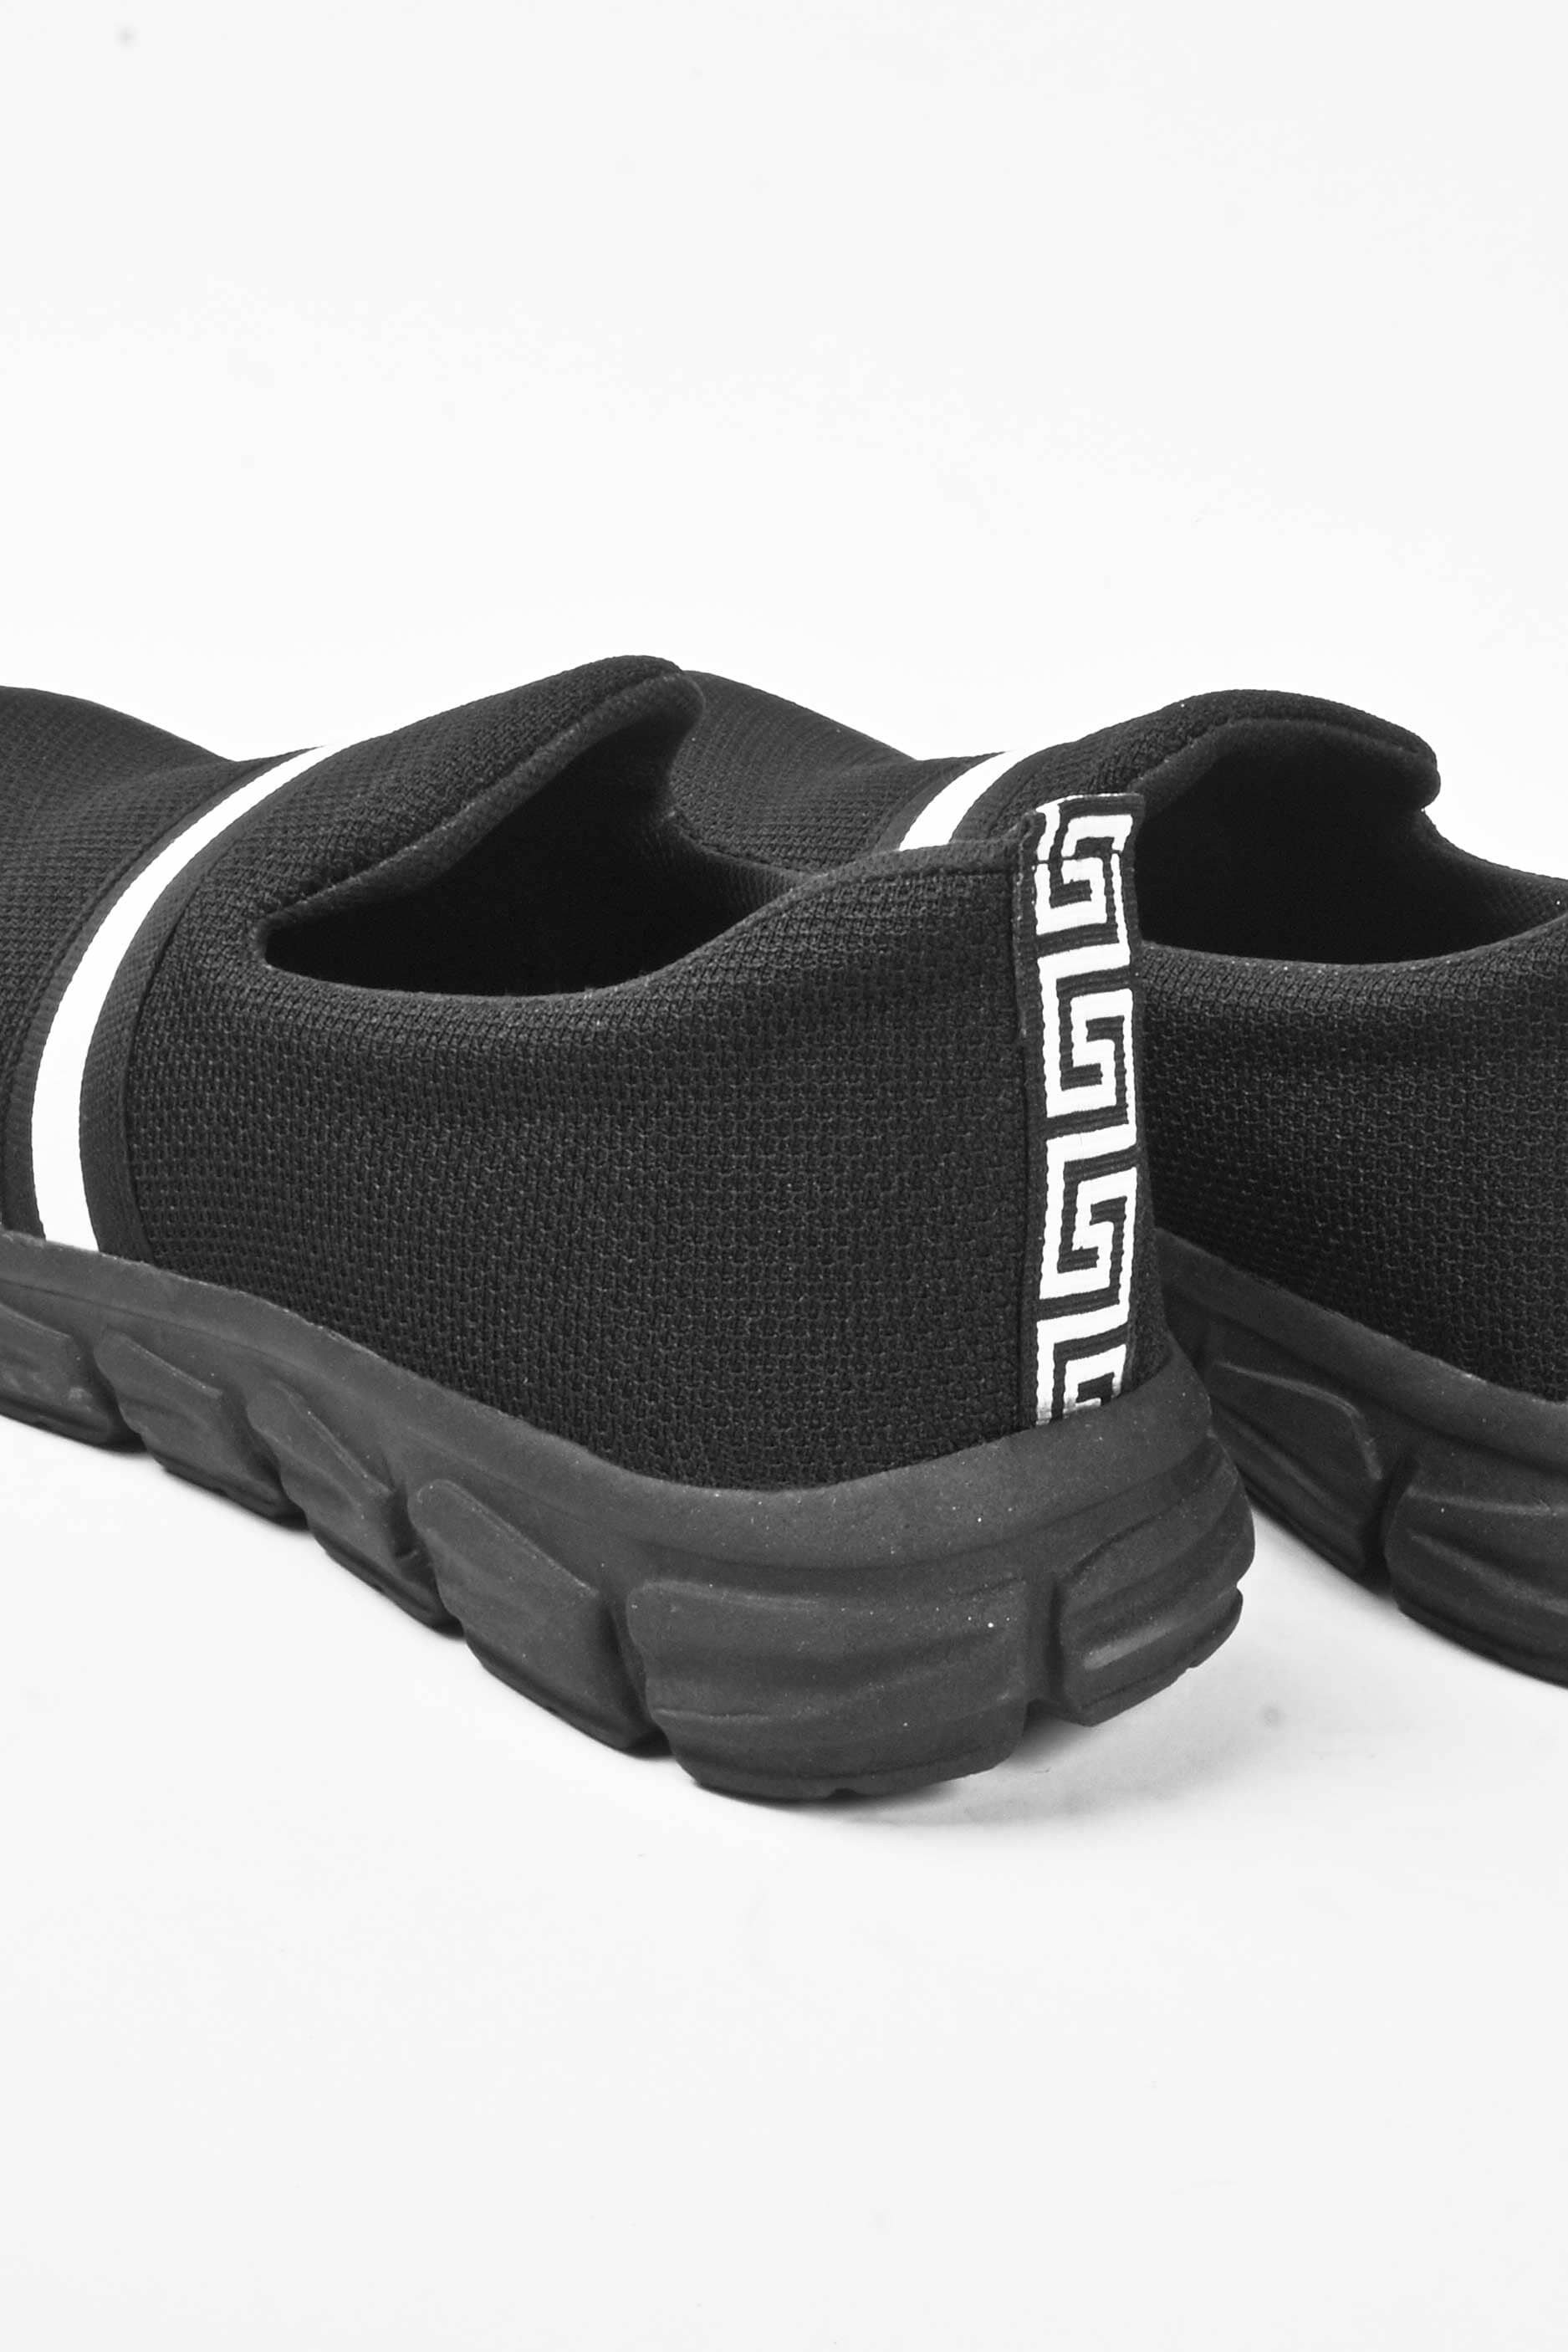 MR Men's Athletic Works Slip On Joggers Men's Shoes SNAN Traders 